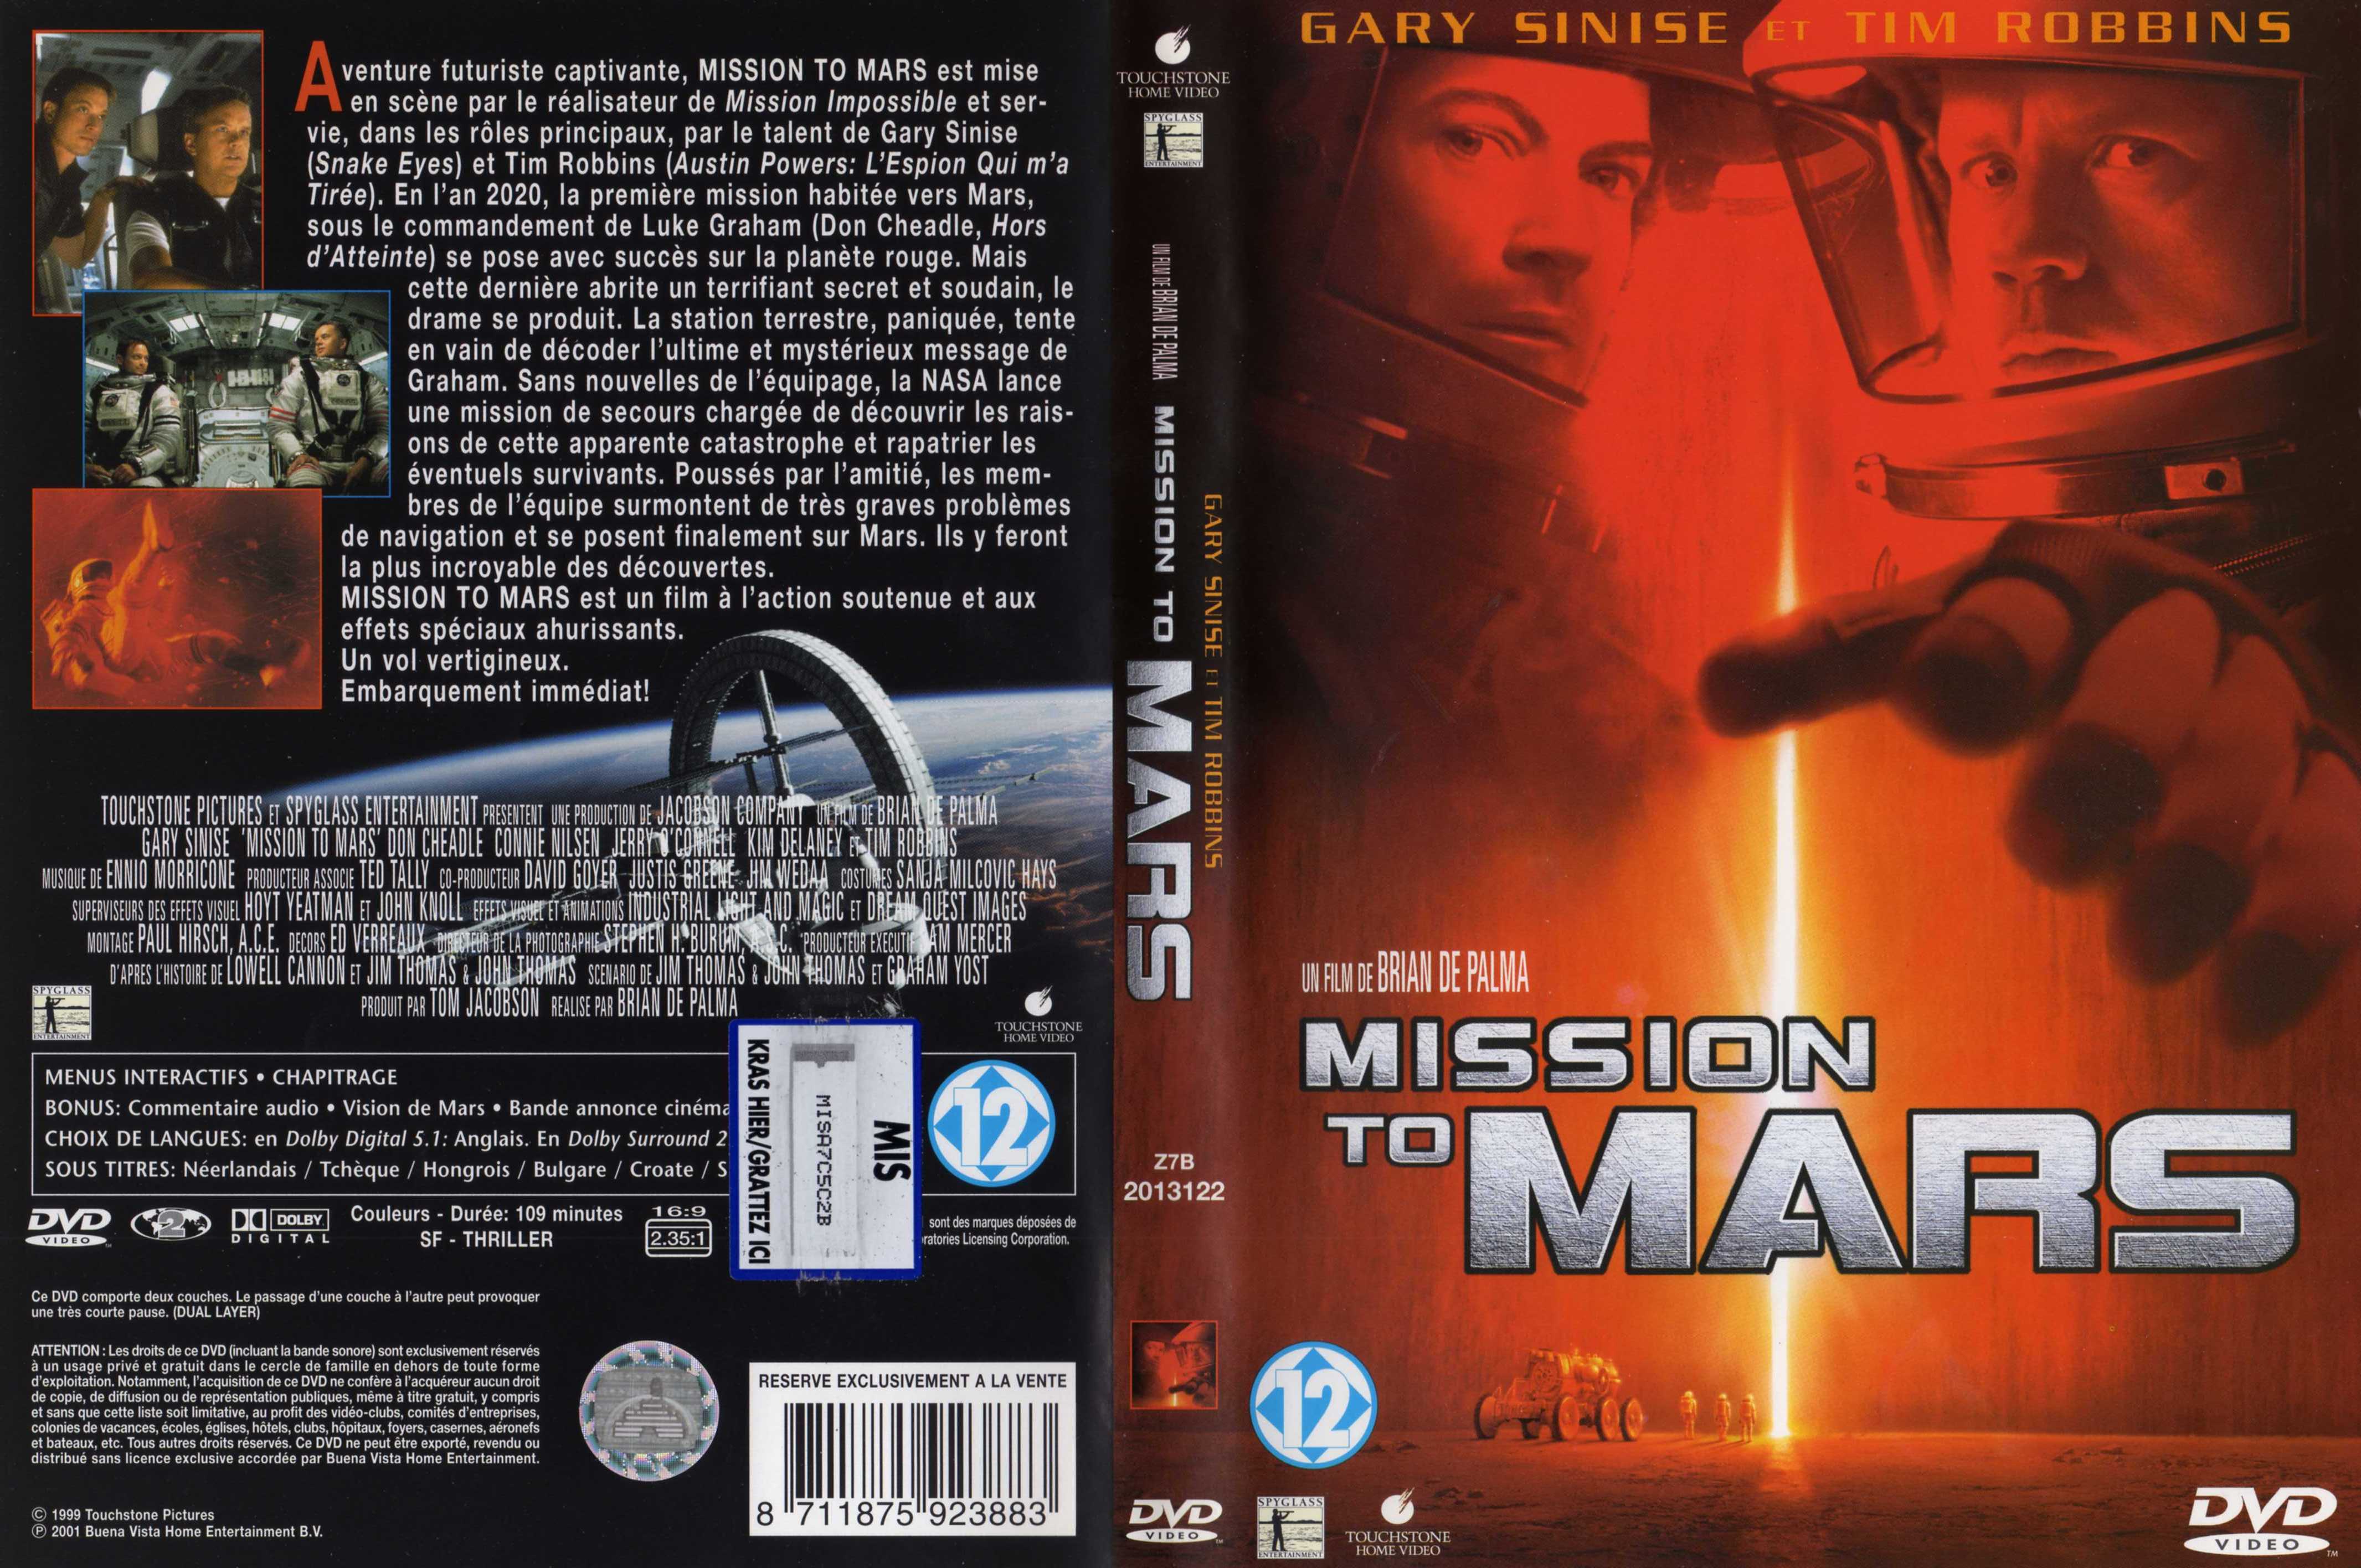 Jaquette DVD Mission to mars v3